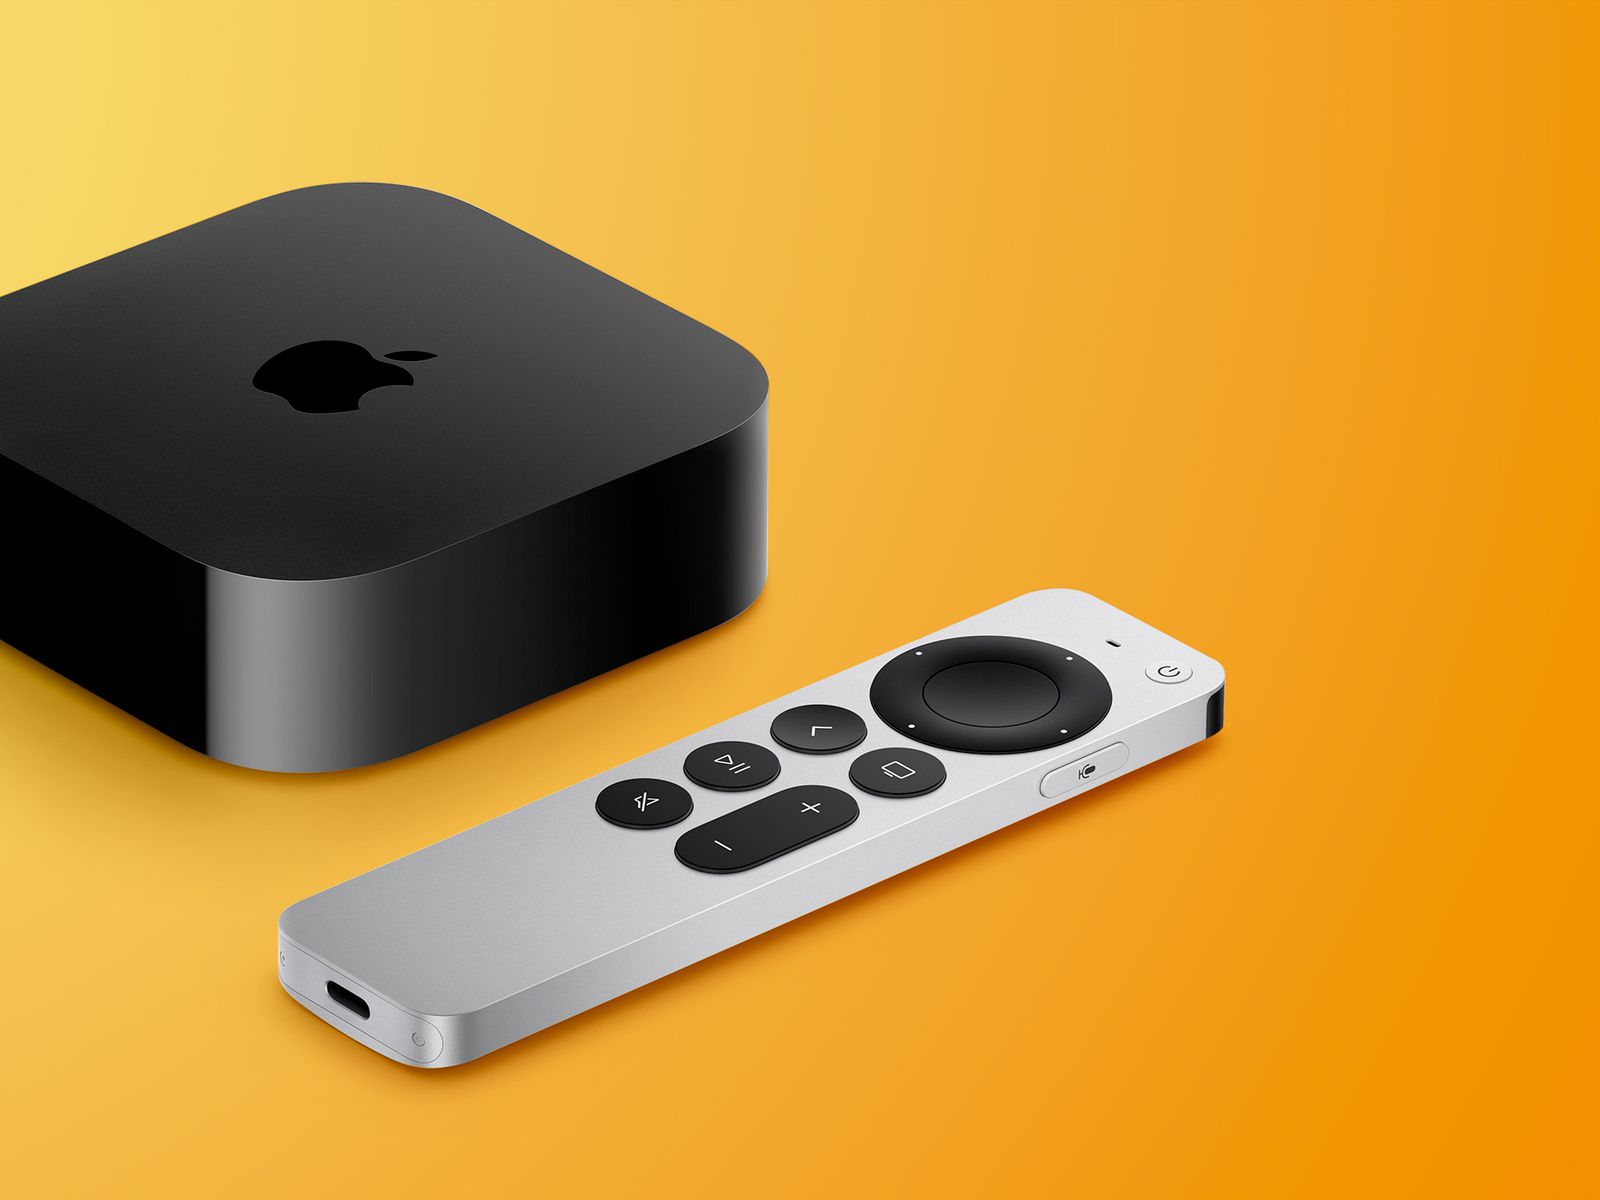 sjælden snemand i morgen Apple TV: Should You Buy? Features, Reviews, and More